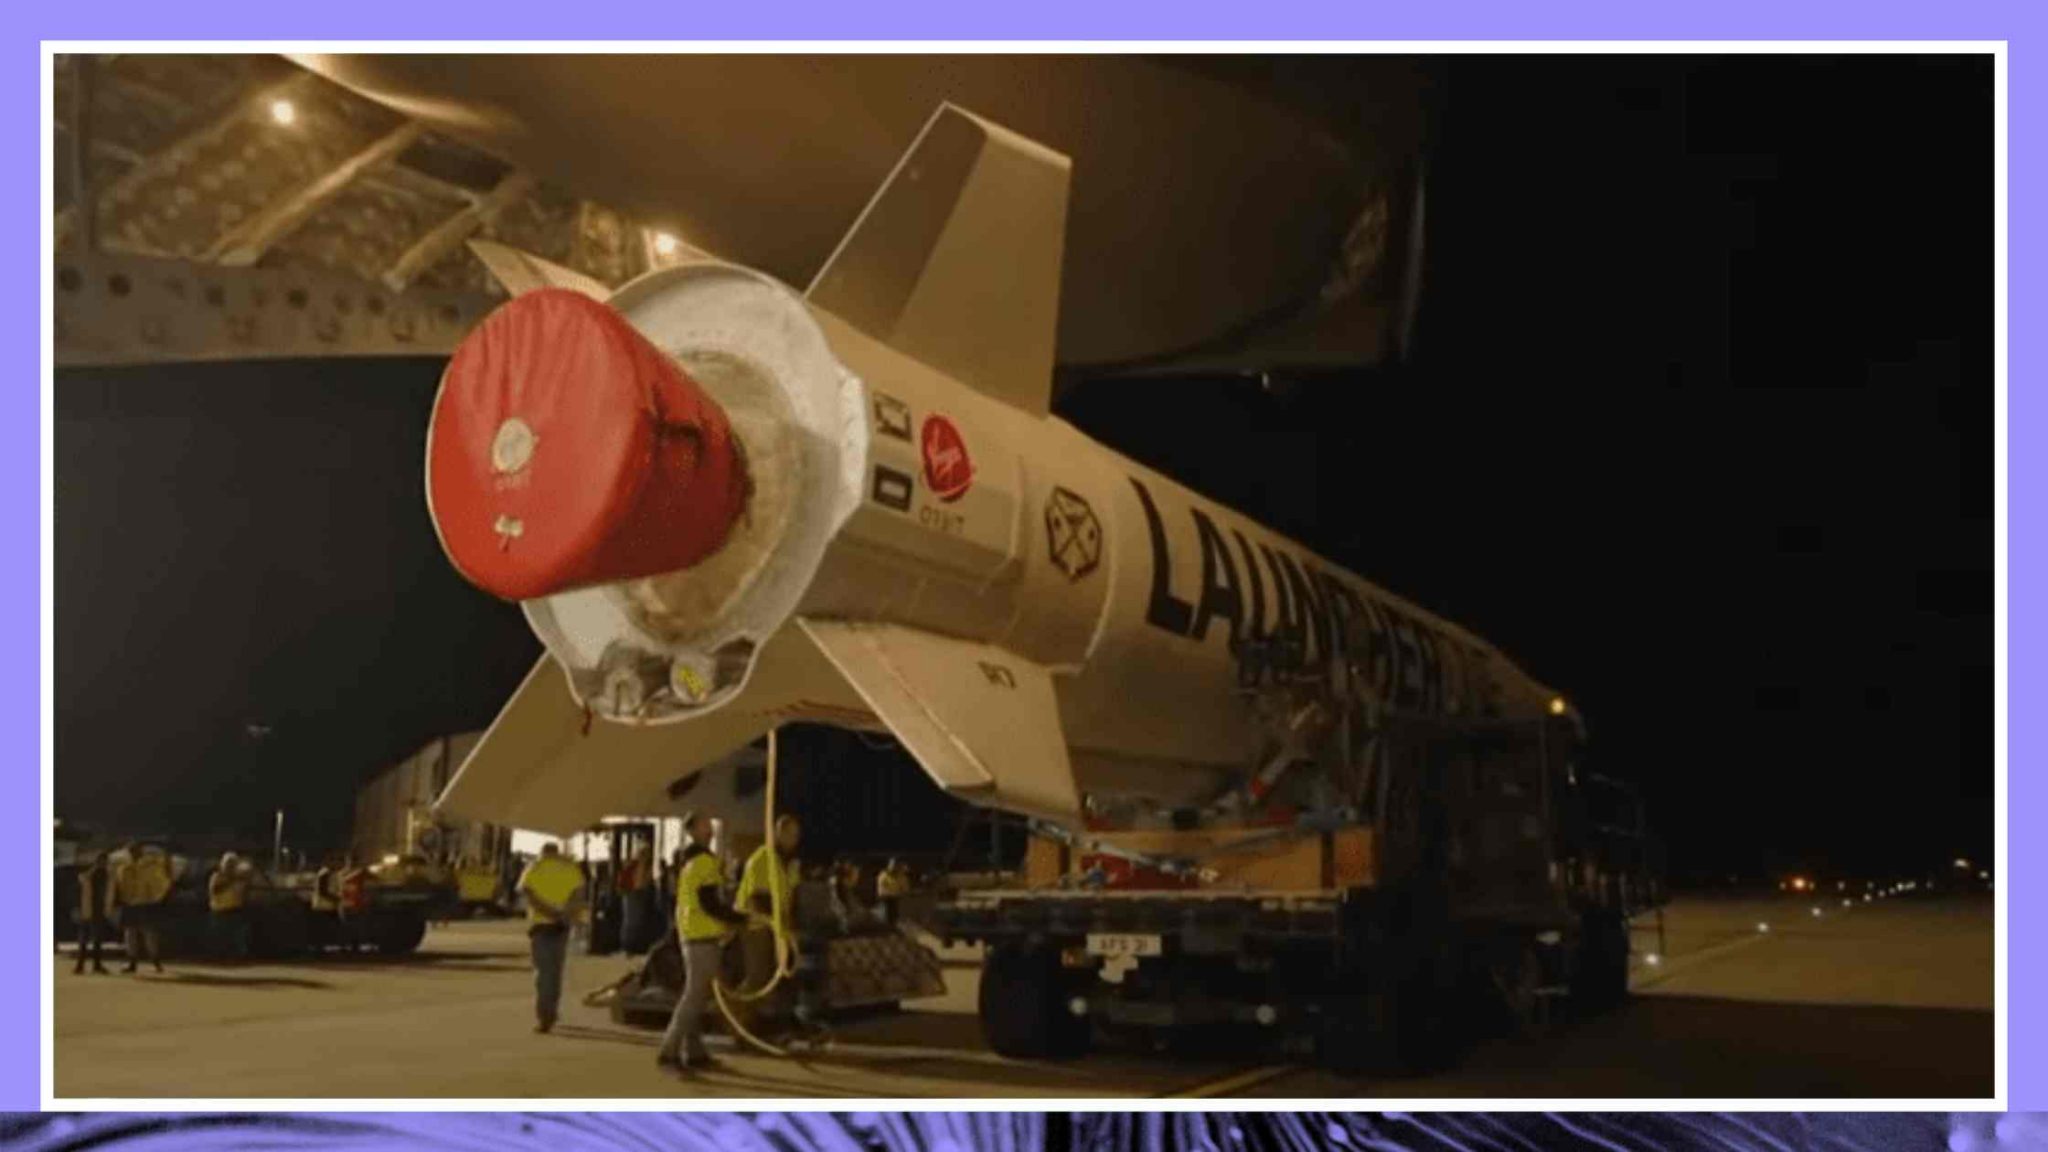 Virgin Orbit Uk Space Mission Fails As Rocket Suffers Anomaly After Launch Transcript Rev Blog